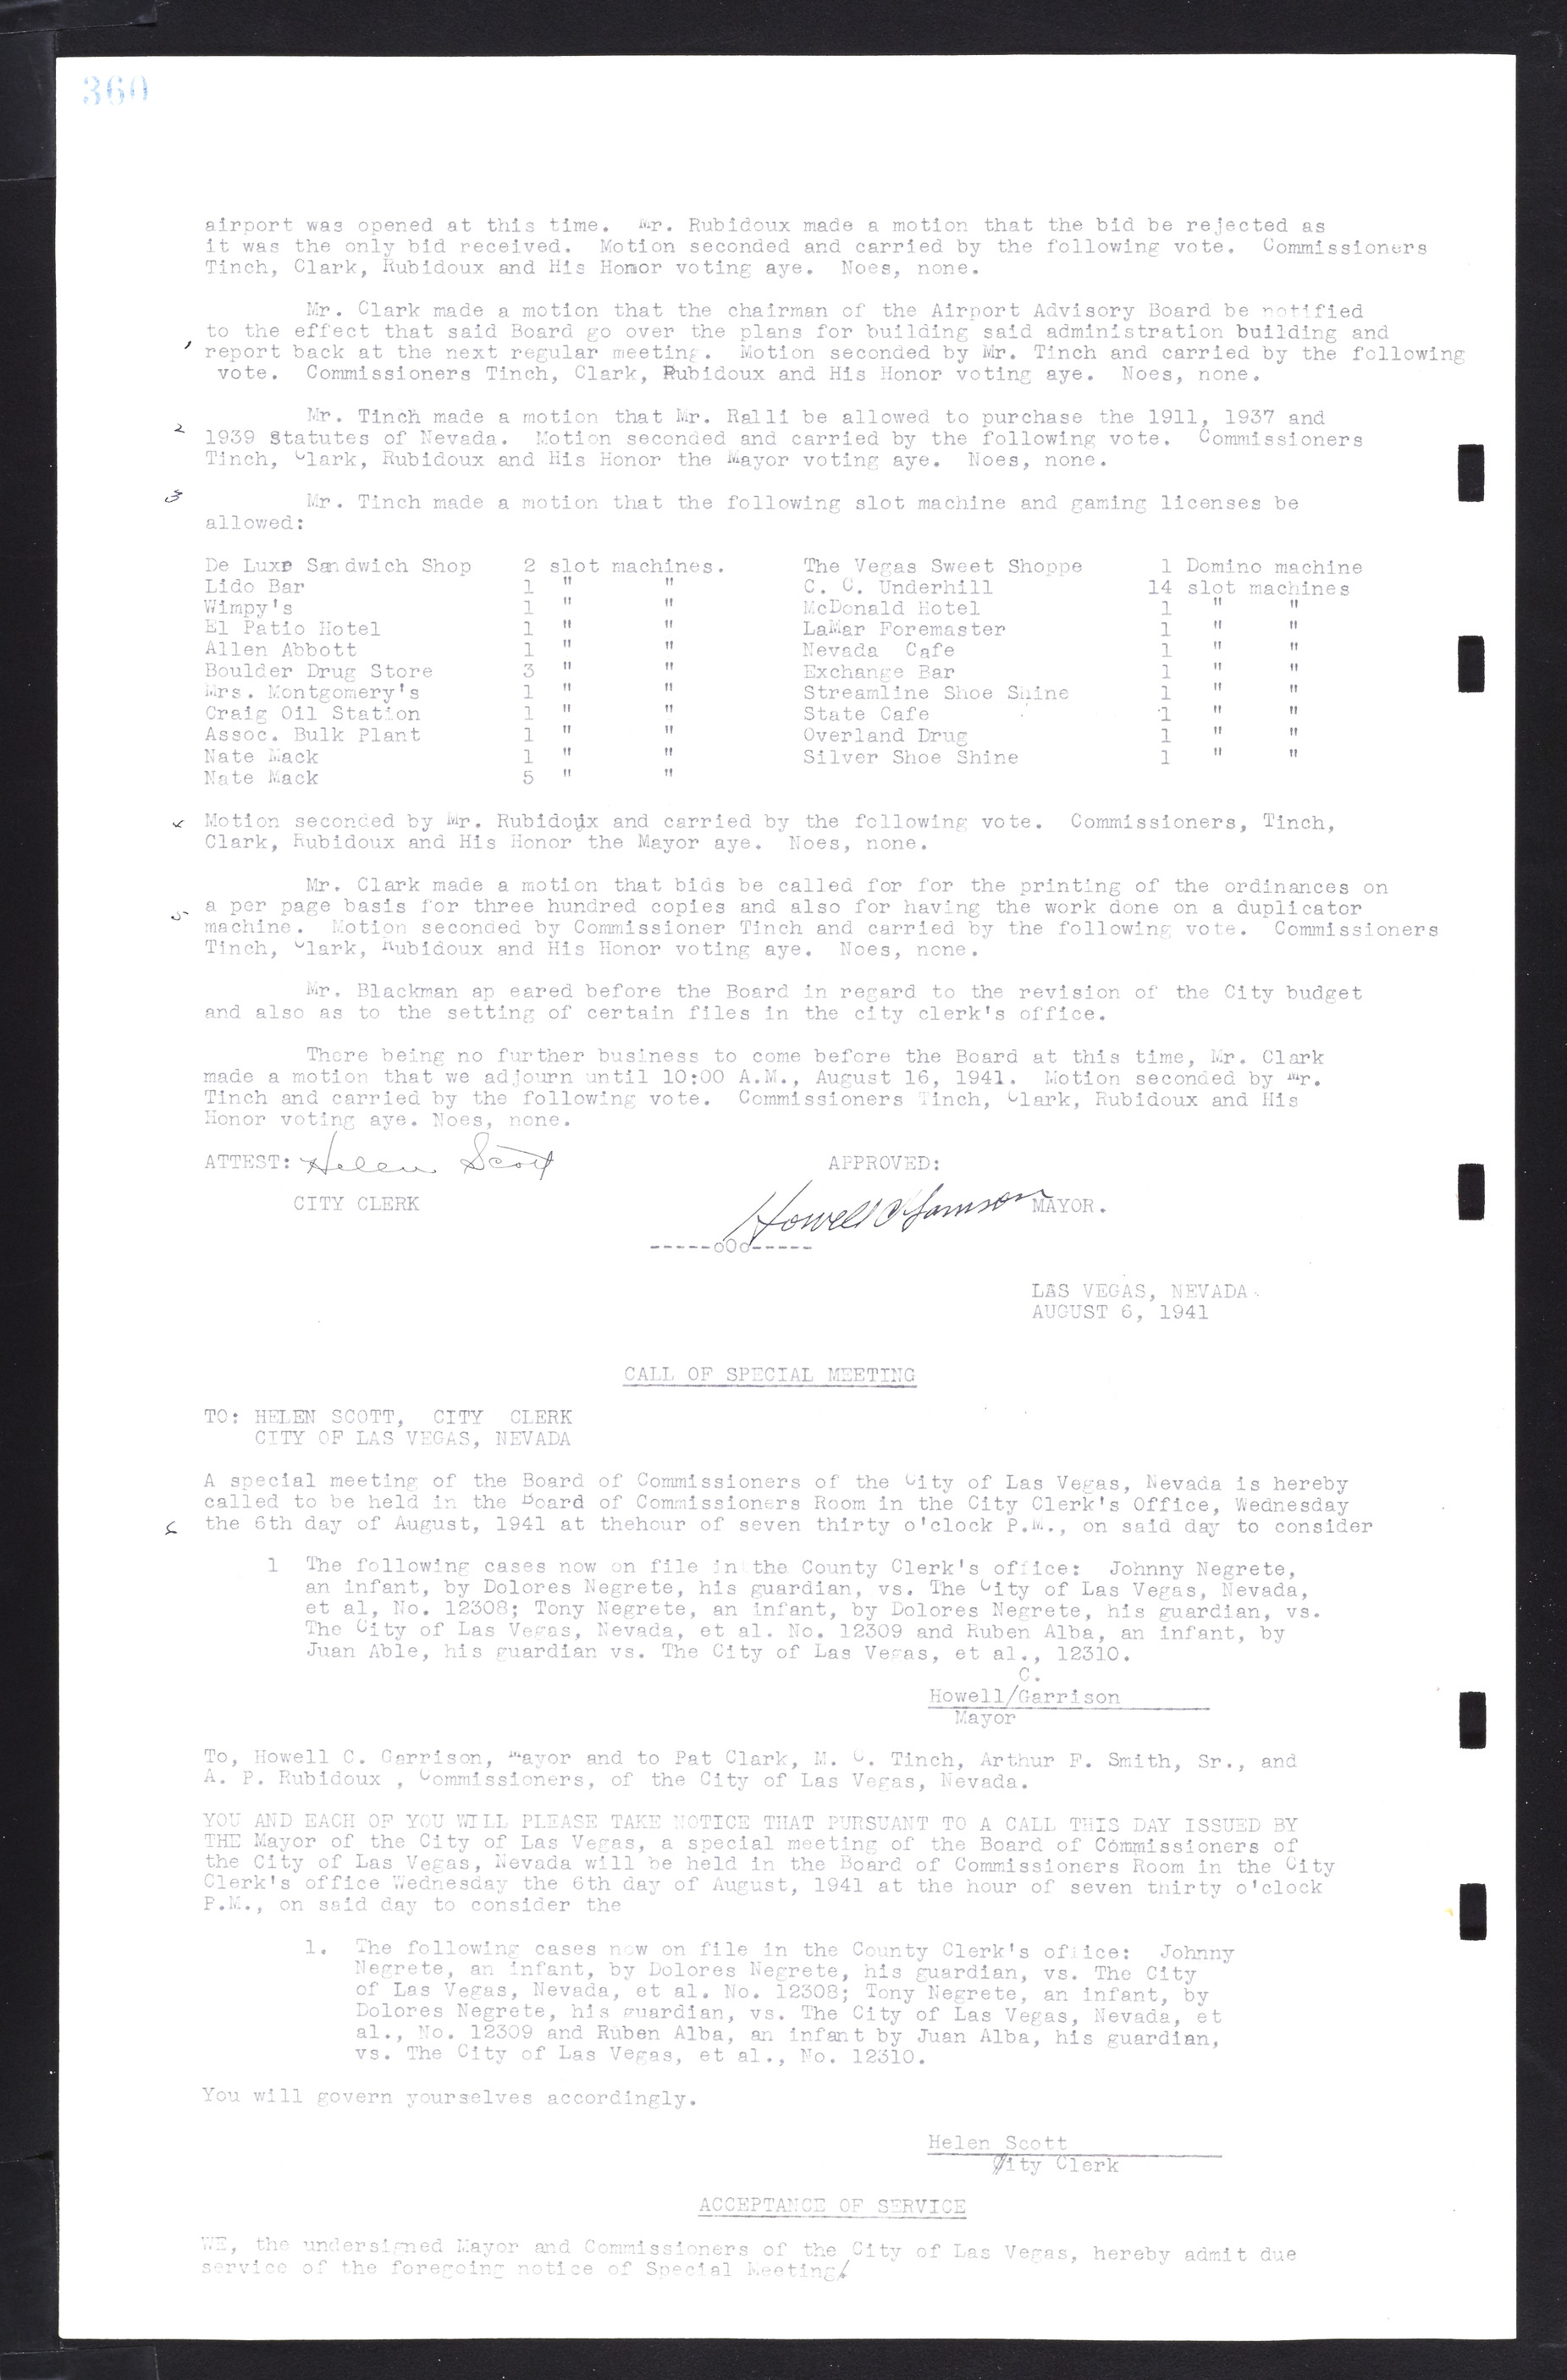 Las Vegas City Commission Minutes, February 17, 1937 to August 4, 1942, lvc000004-386